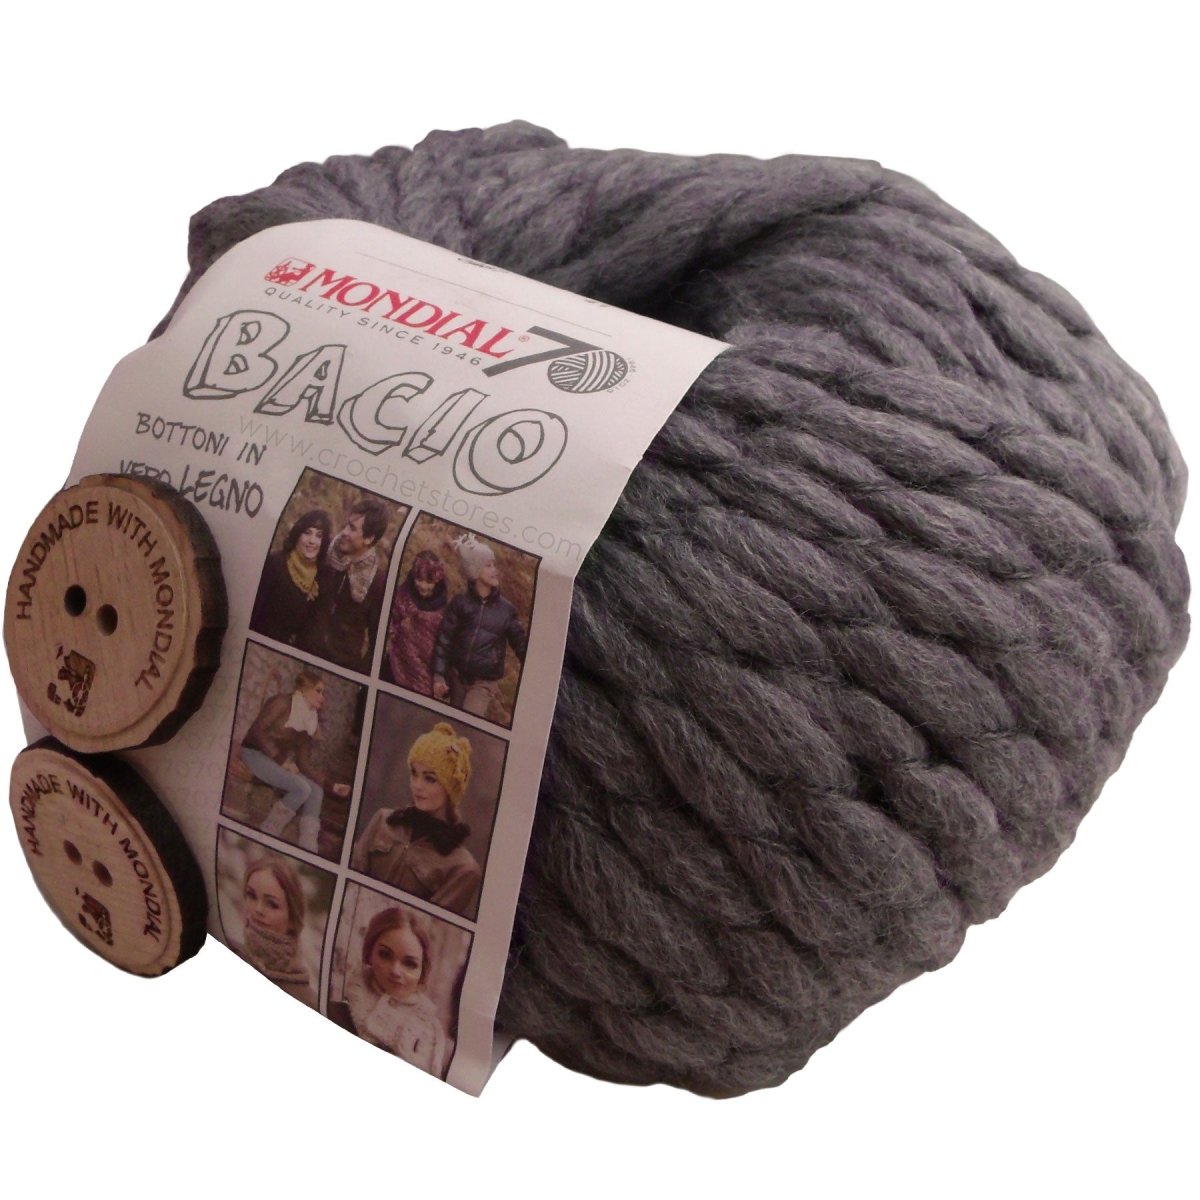 BACIO - Crochetstores12019878020586411399